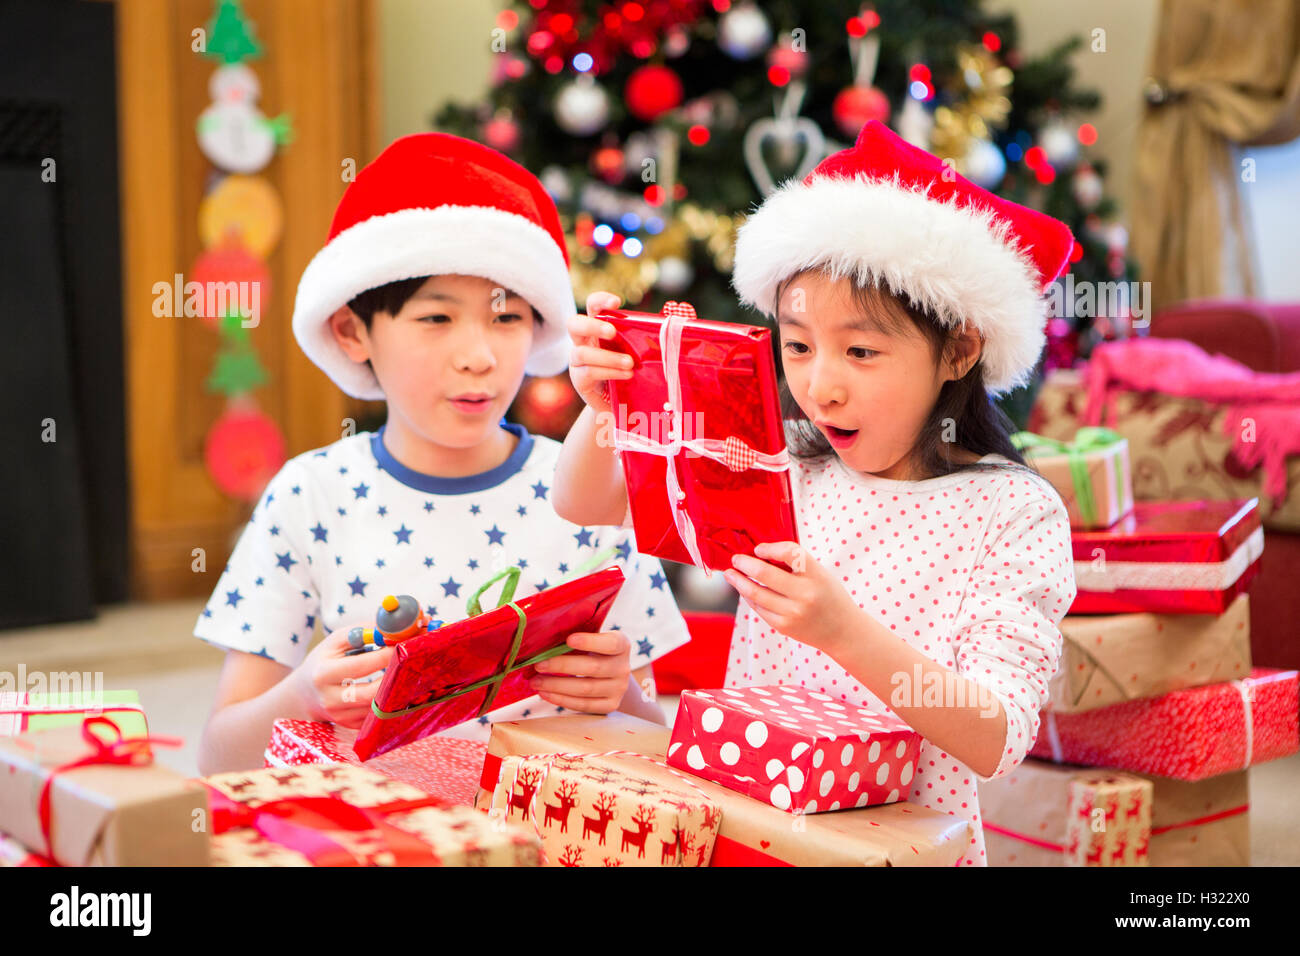 children opening presents